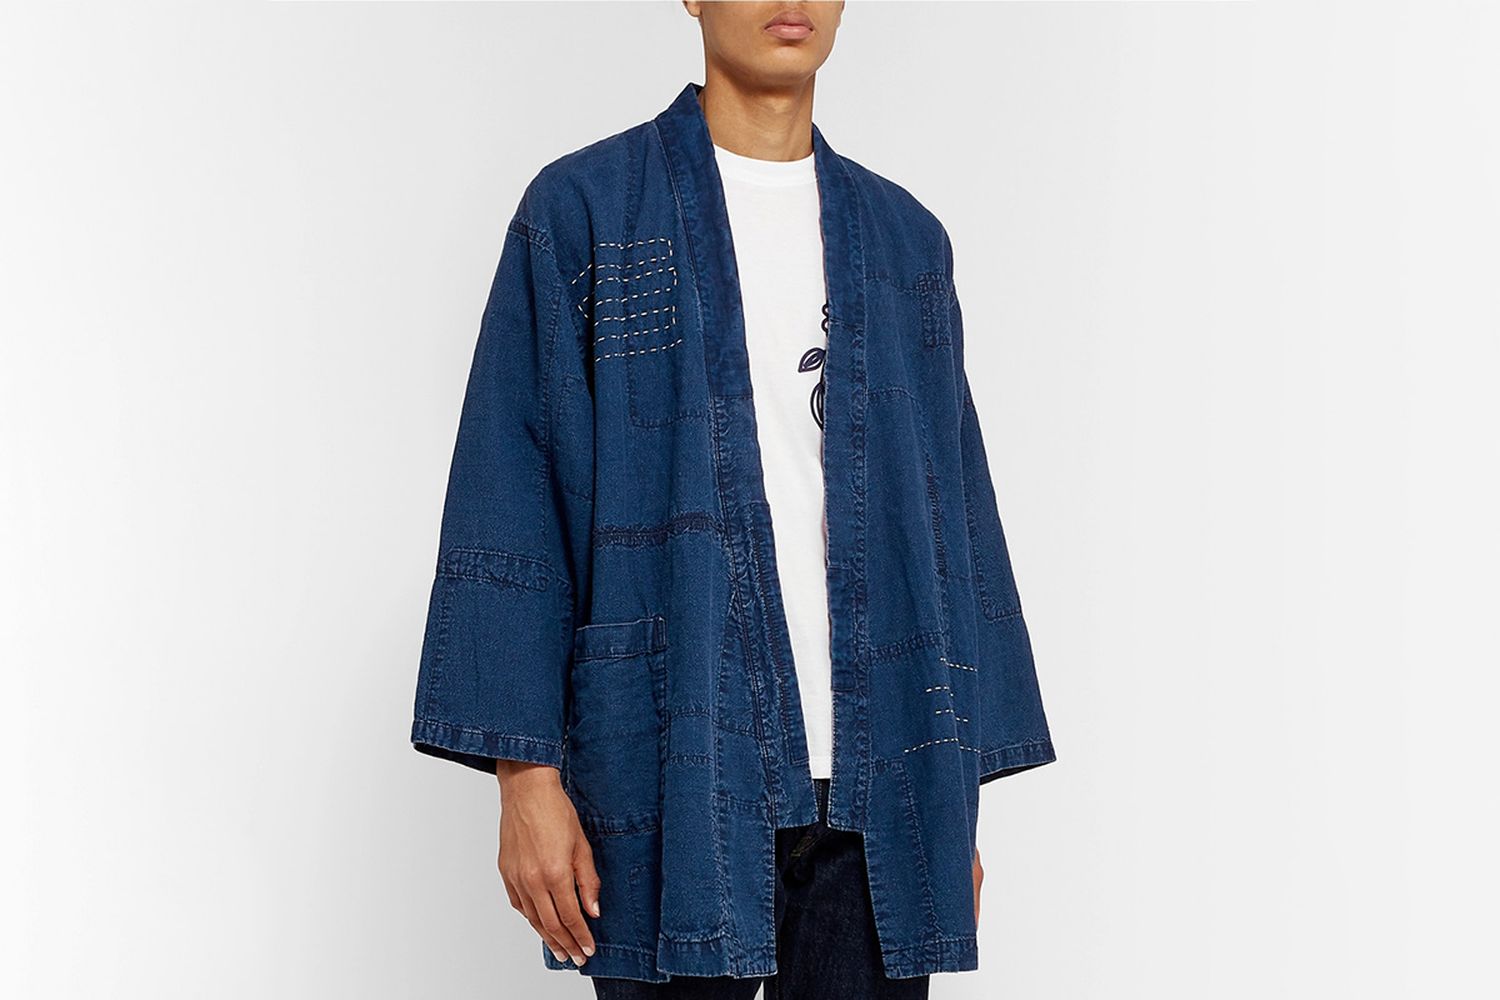 Patchwork Embroidered Linen Jacket